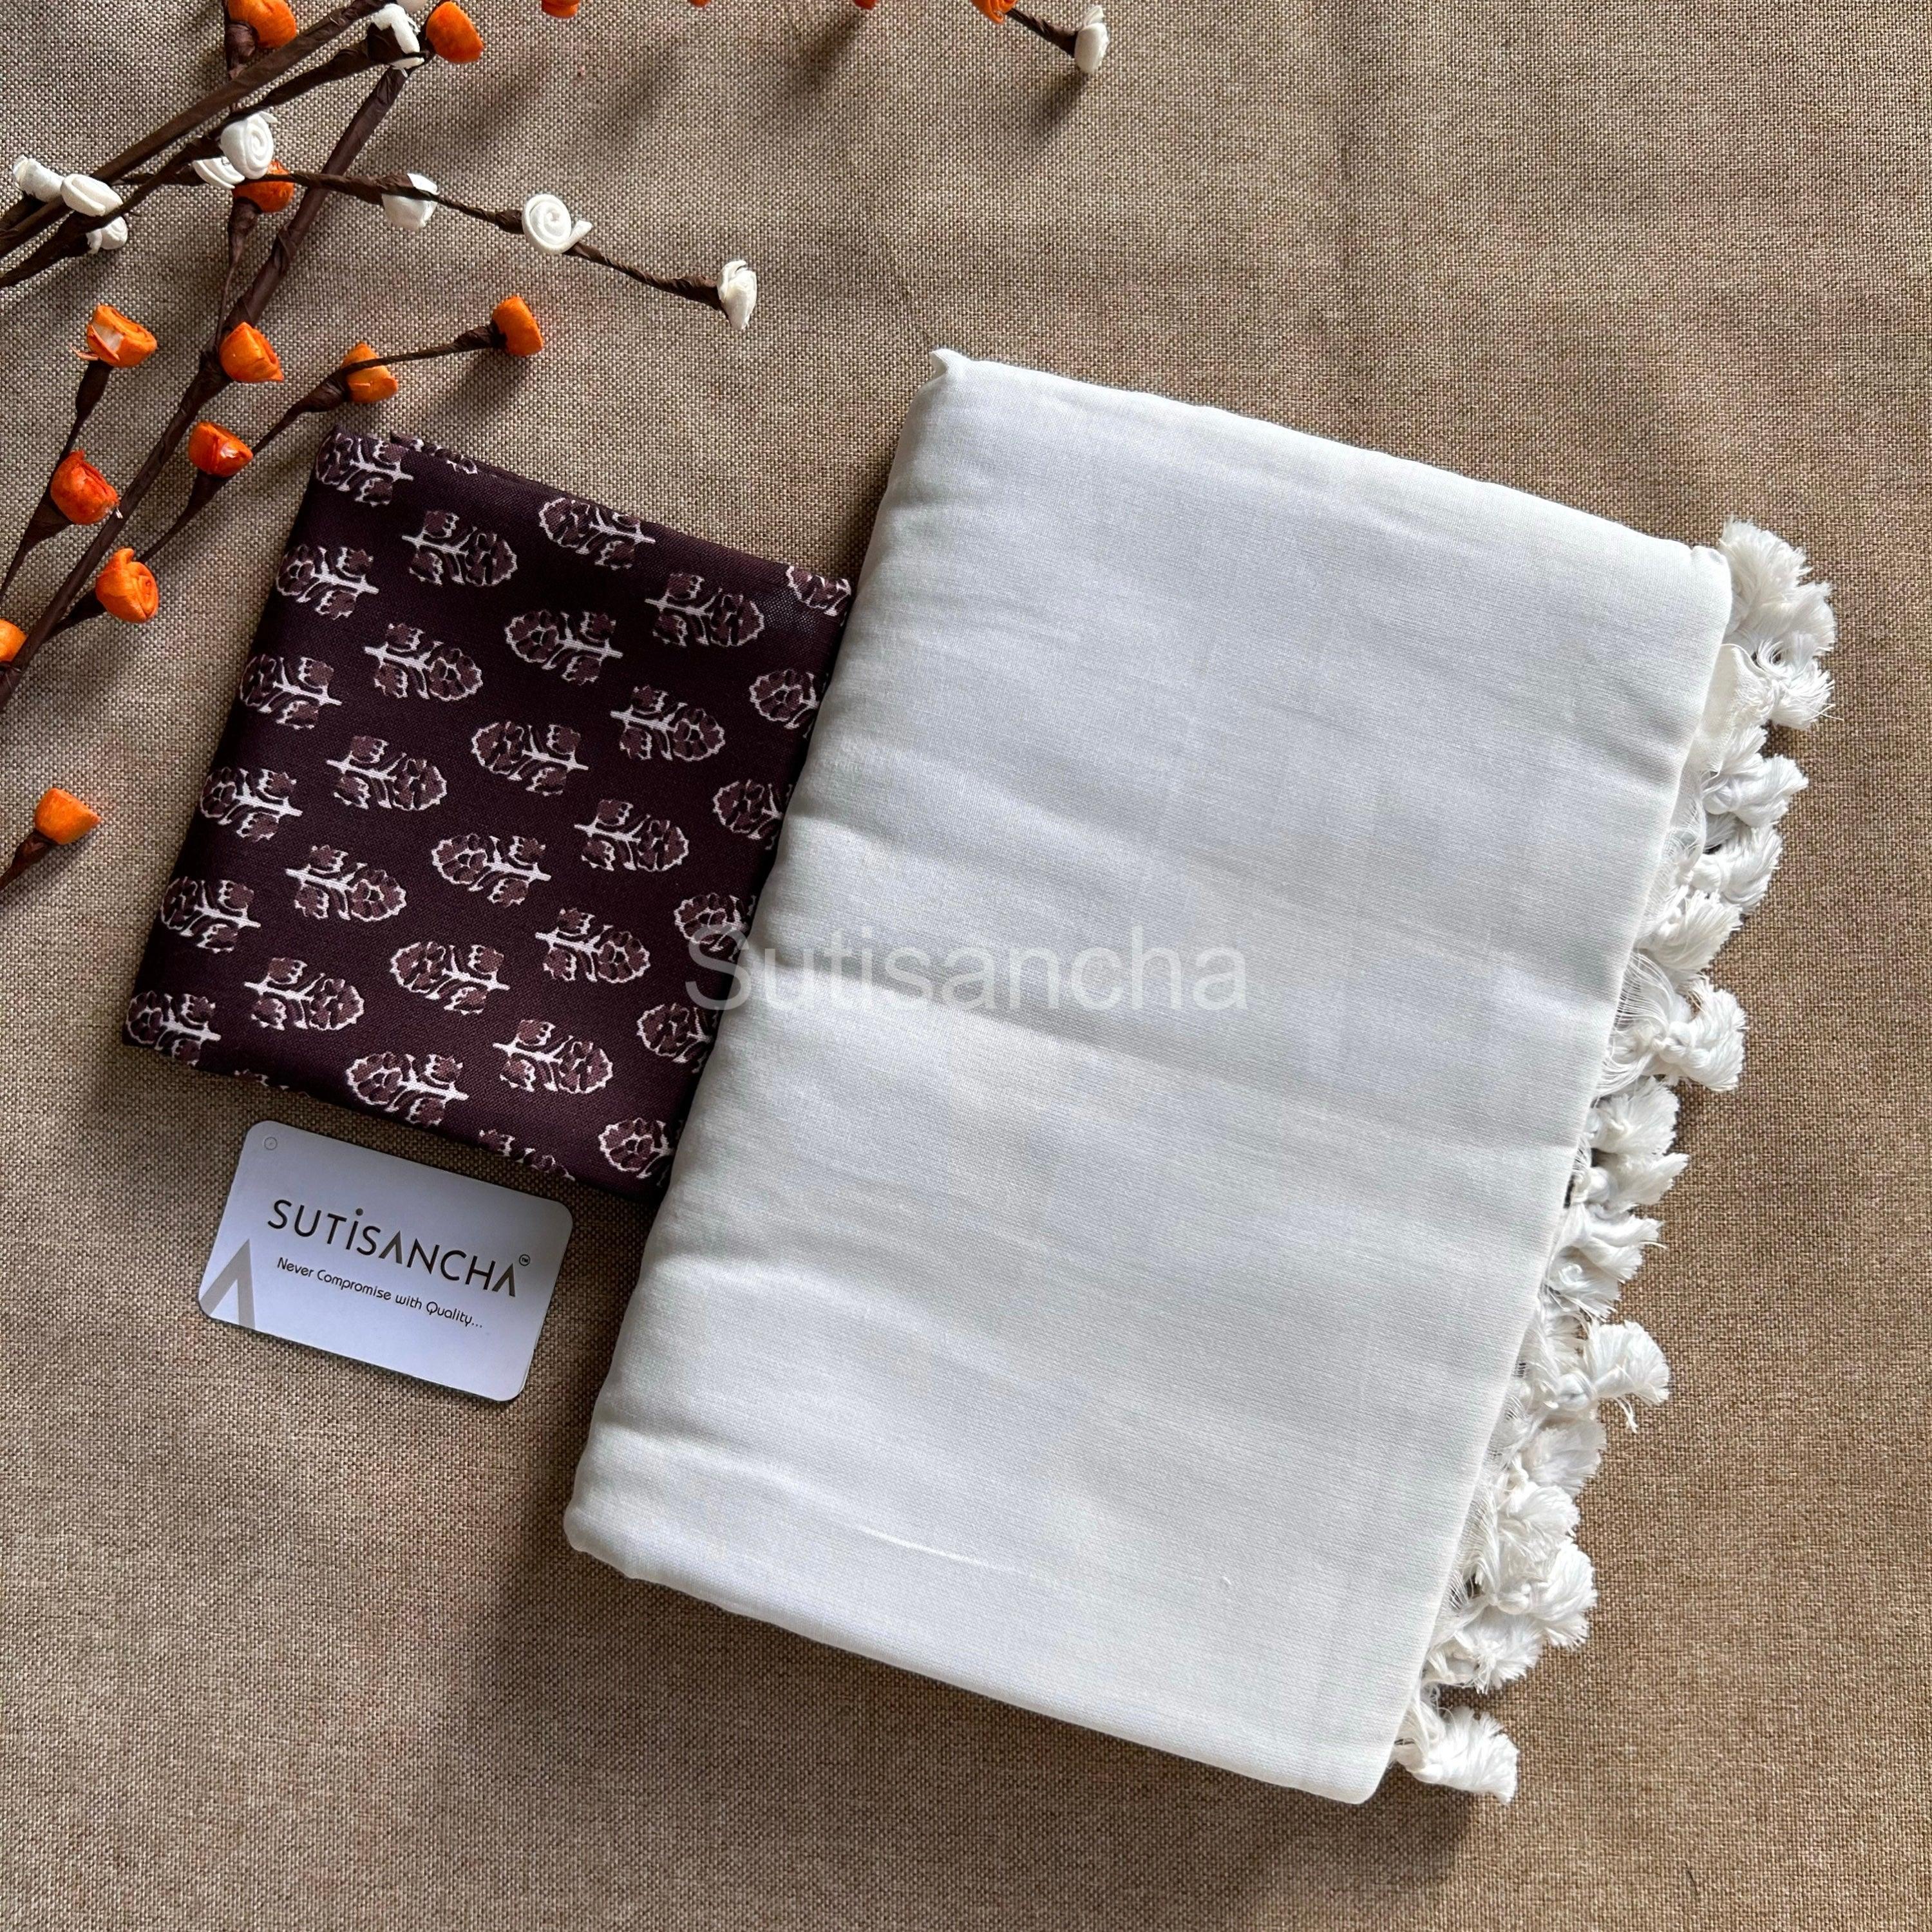 Sutisancha White Khadi Saree & Brown Cotton Blouse - Suti Sancha